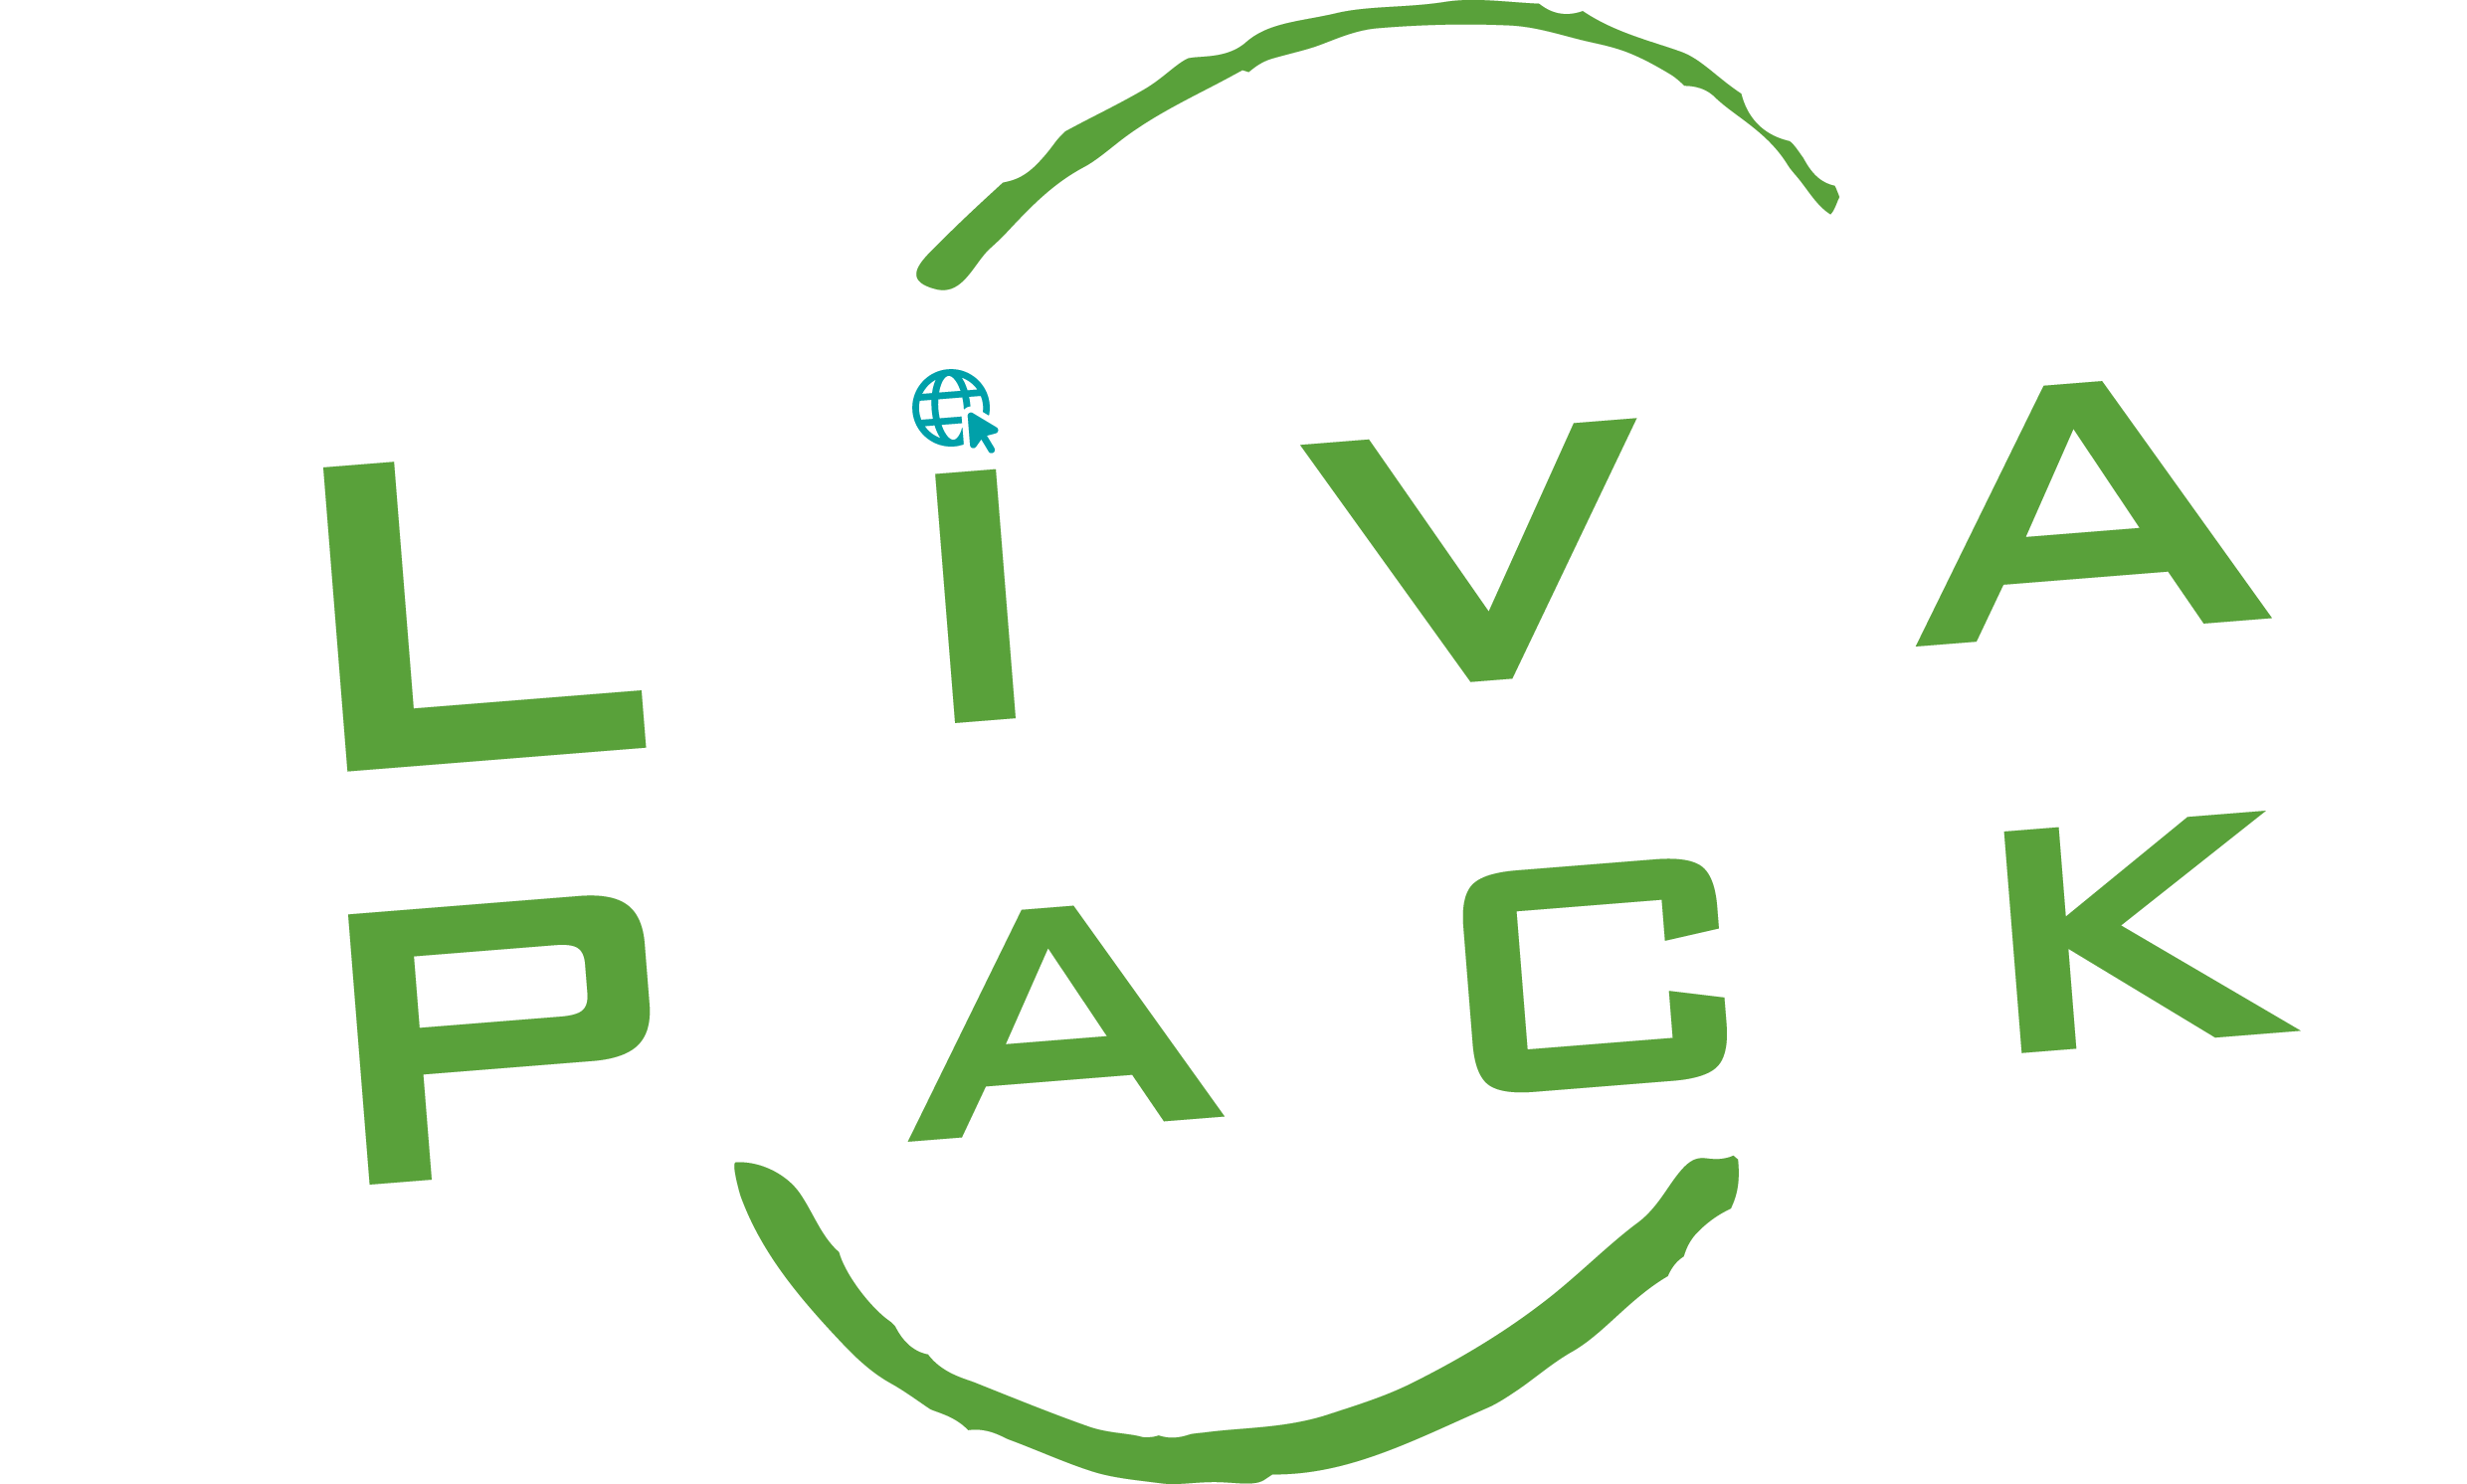 Liva Group